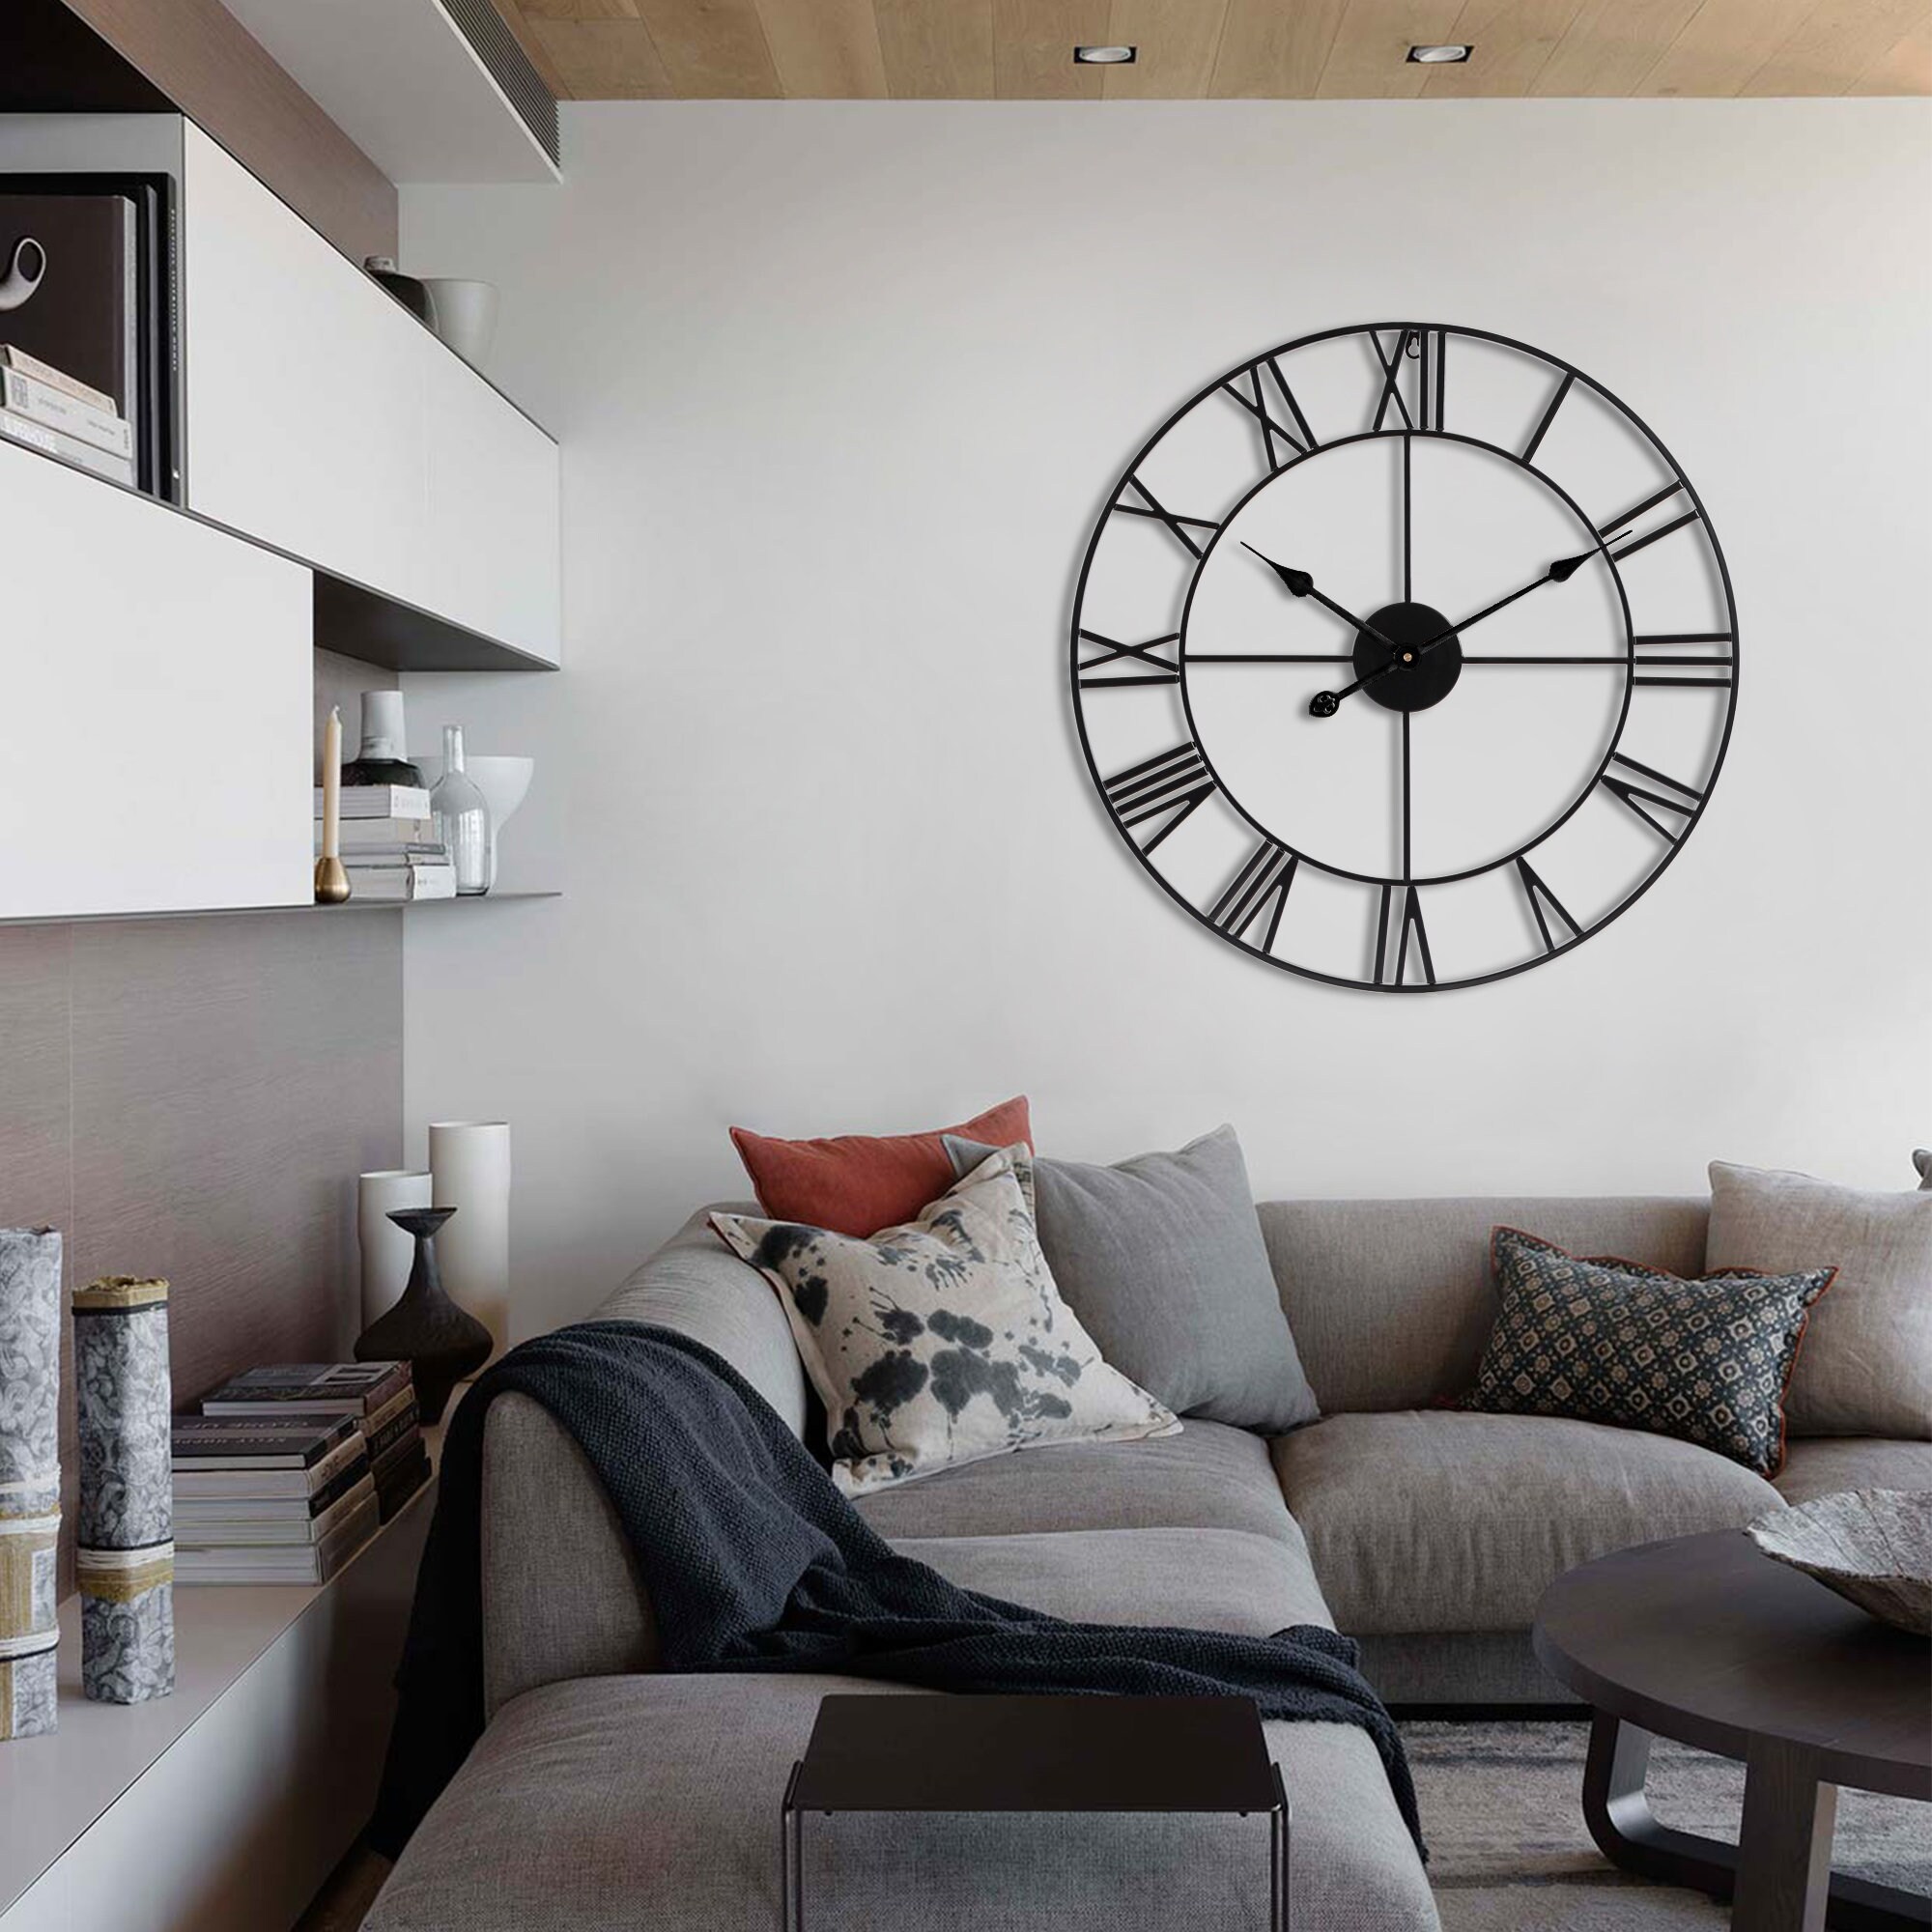 40cm Black Greensen Wall Clock Vintage Silent Clock 3D Decorative Gear with Roman Numerals Indoor Quiet Metal Wall Clock for Loft Bedroom Living Room Kitchen Bar Cafe 